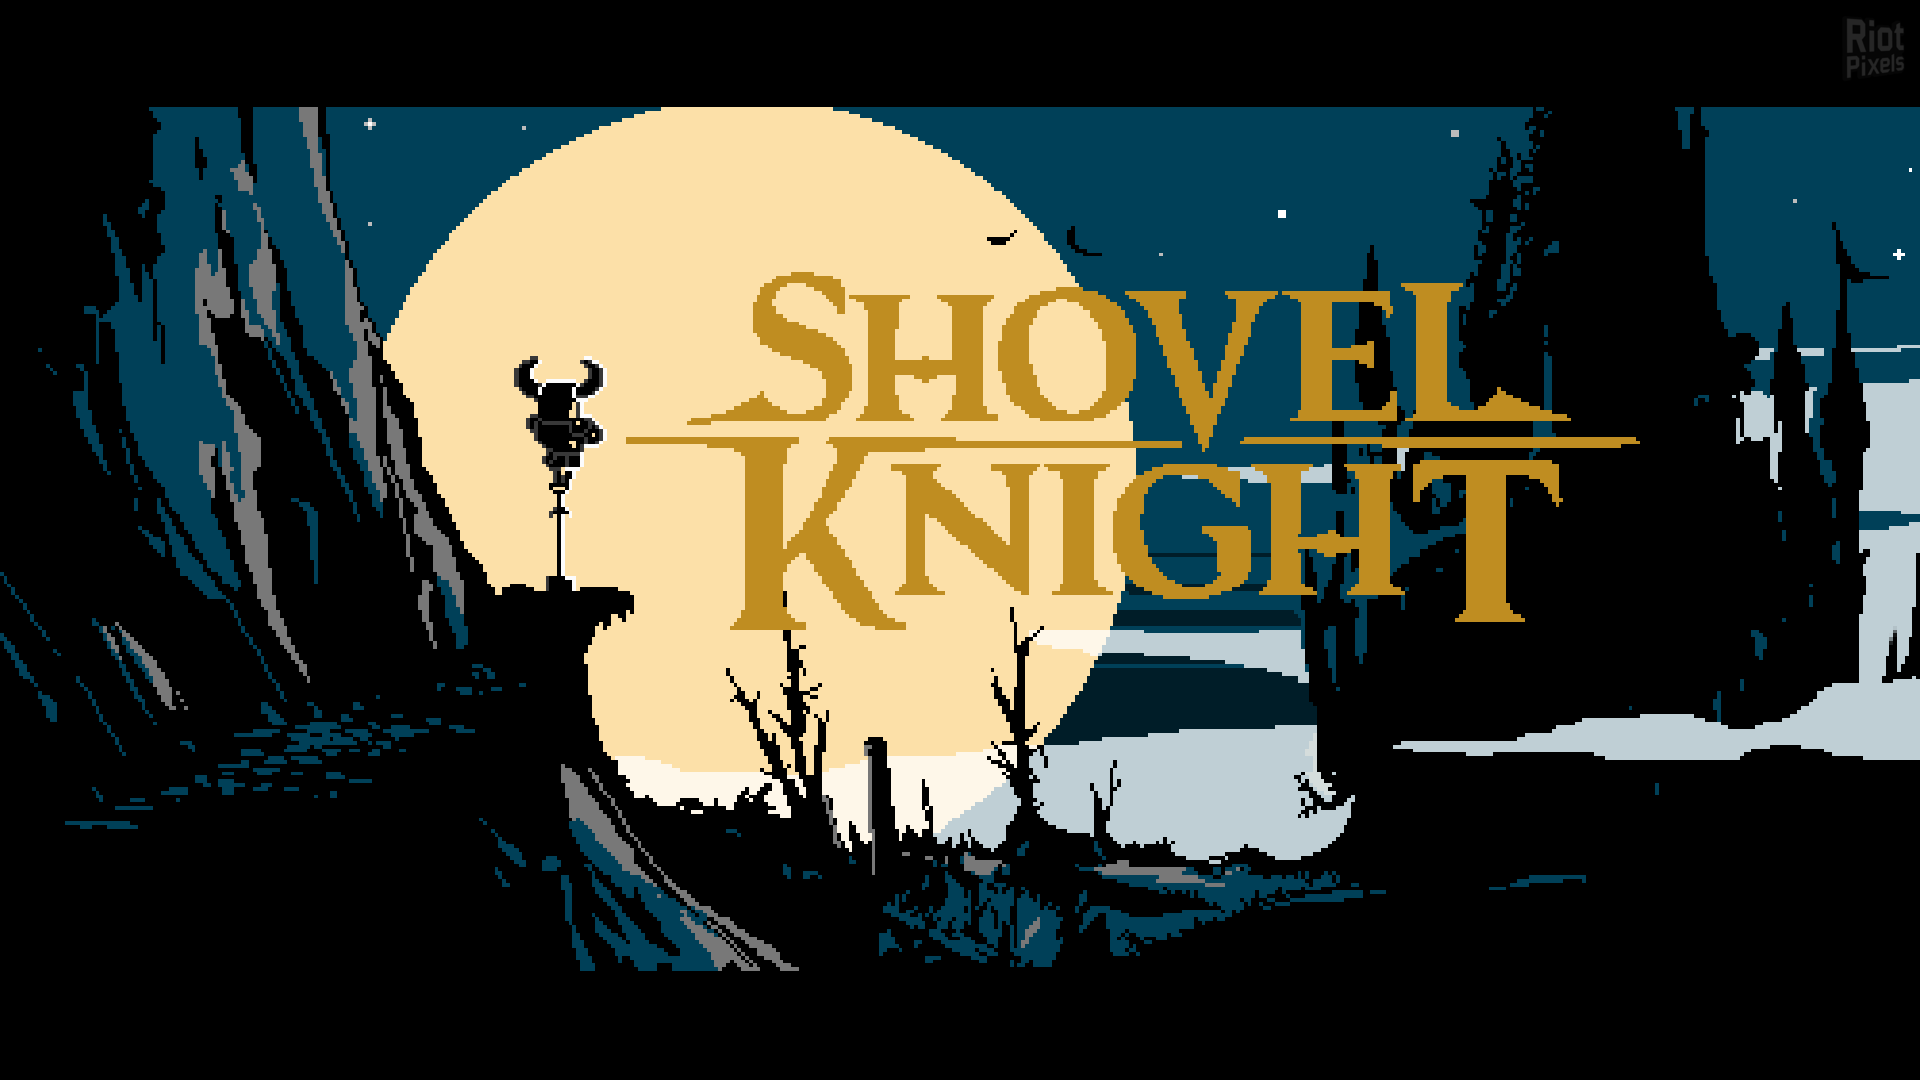 Shovel Knight Phone Wallpapers